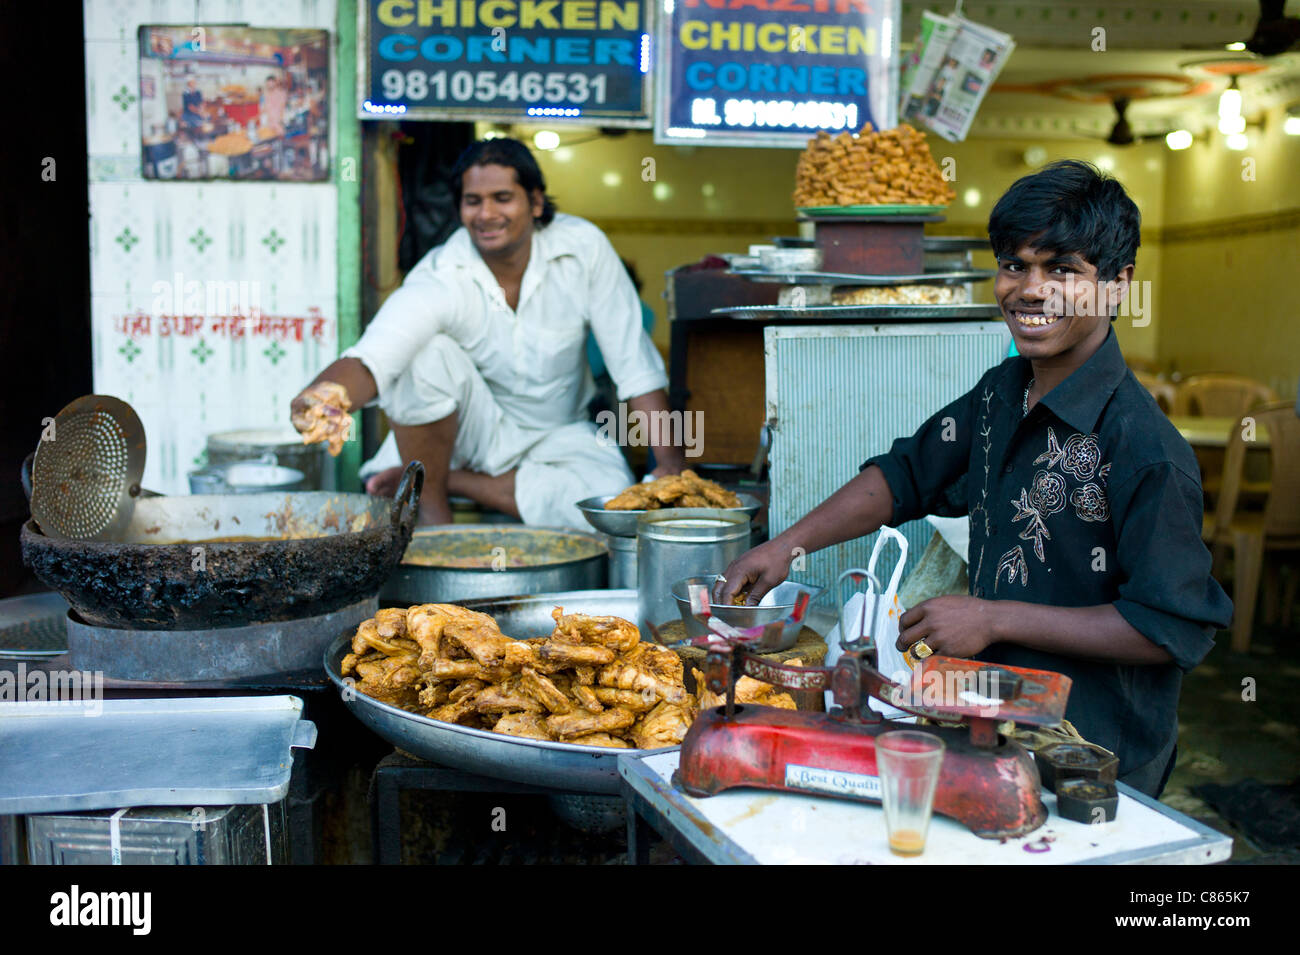 Food on sale at Chicken Corner in Snack market at muslim Meena Bazar, in Old Delhi, India Stock Photo